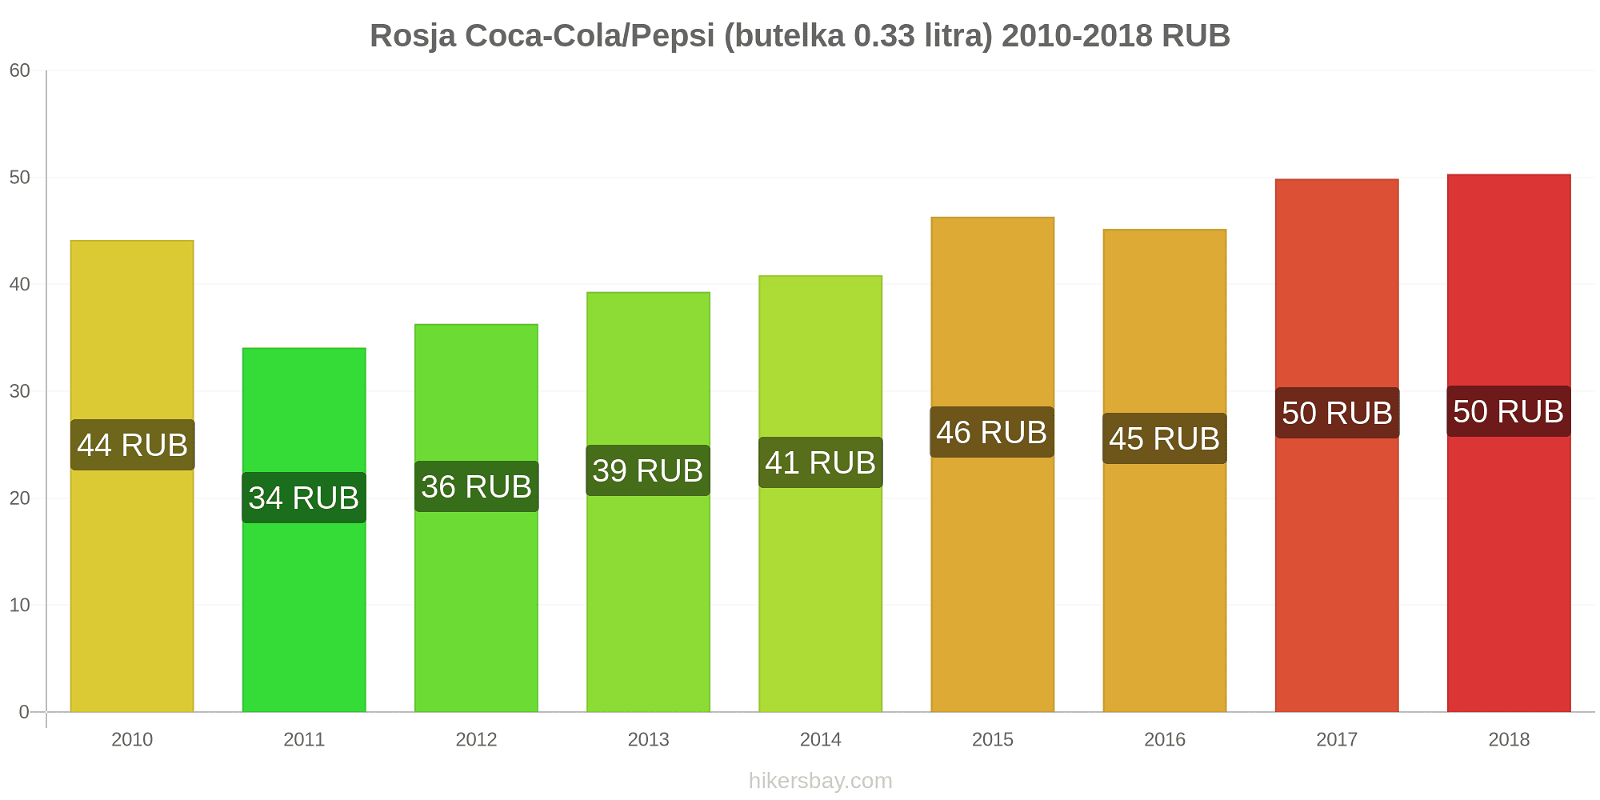 Rosja zmiany cen Coca-Cola/Pepsi (butelka 0.33 litra) hikersbay.com